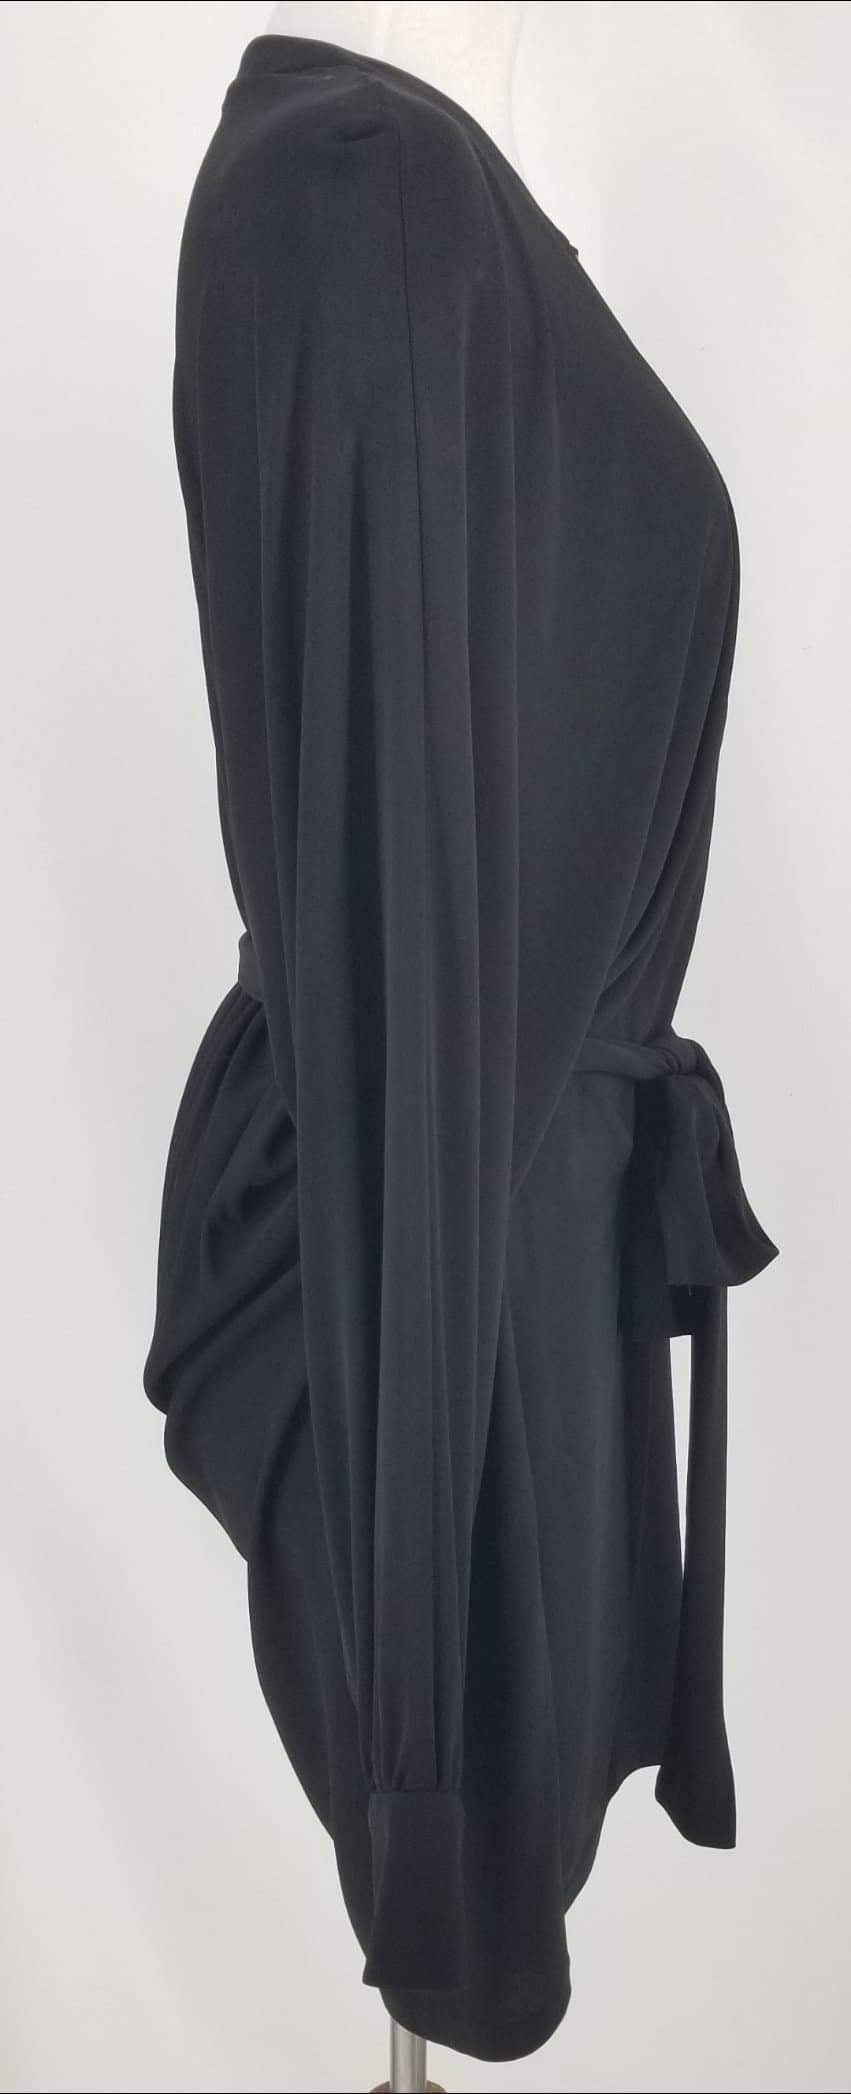 Authentic Balmain Black Dress Sz S